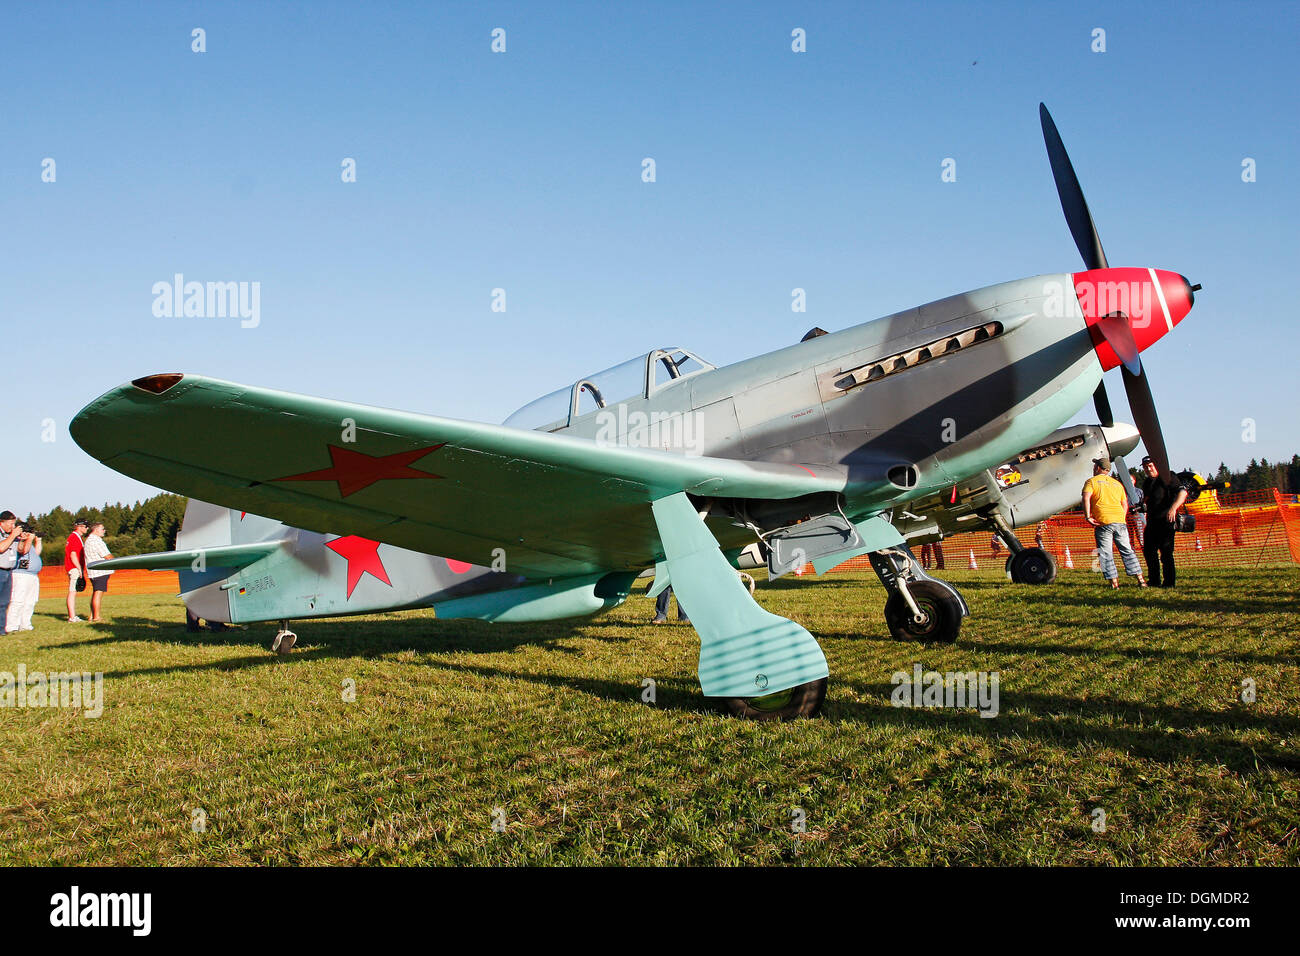 Aerei vintage, Yakovlev Yak 9, warplane dell'aria sovietica vigore dalla seconda guerra mondiale, Breitscheid Airshow 2010, Hesse Foto Stock